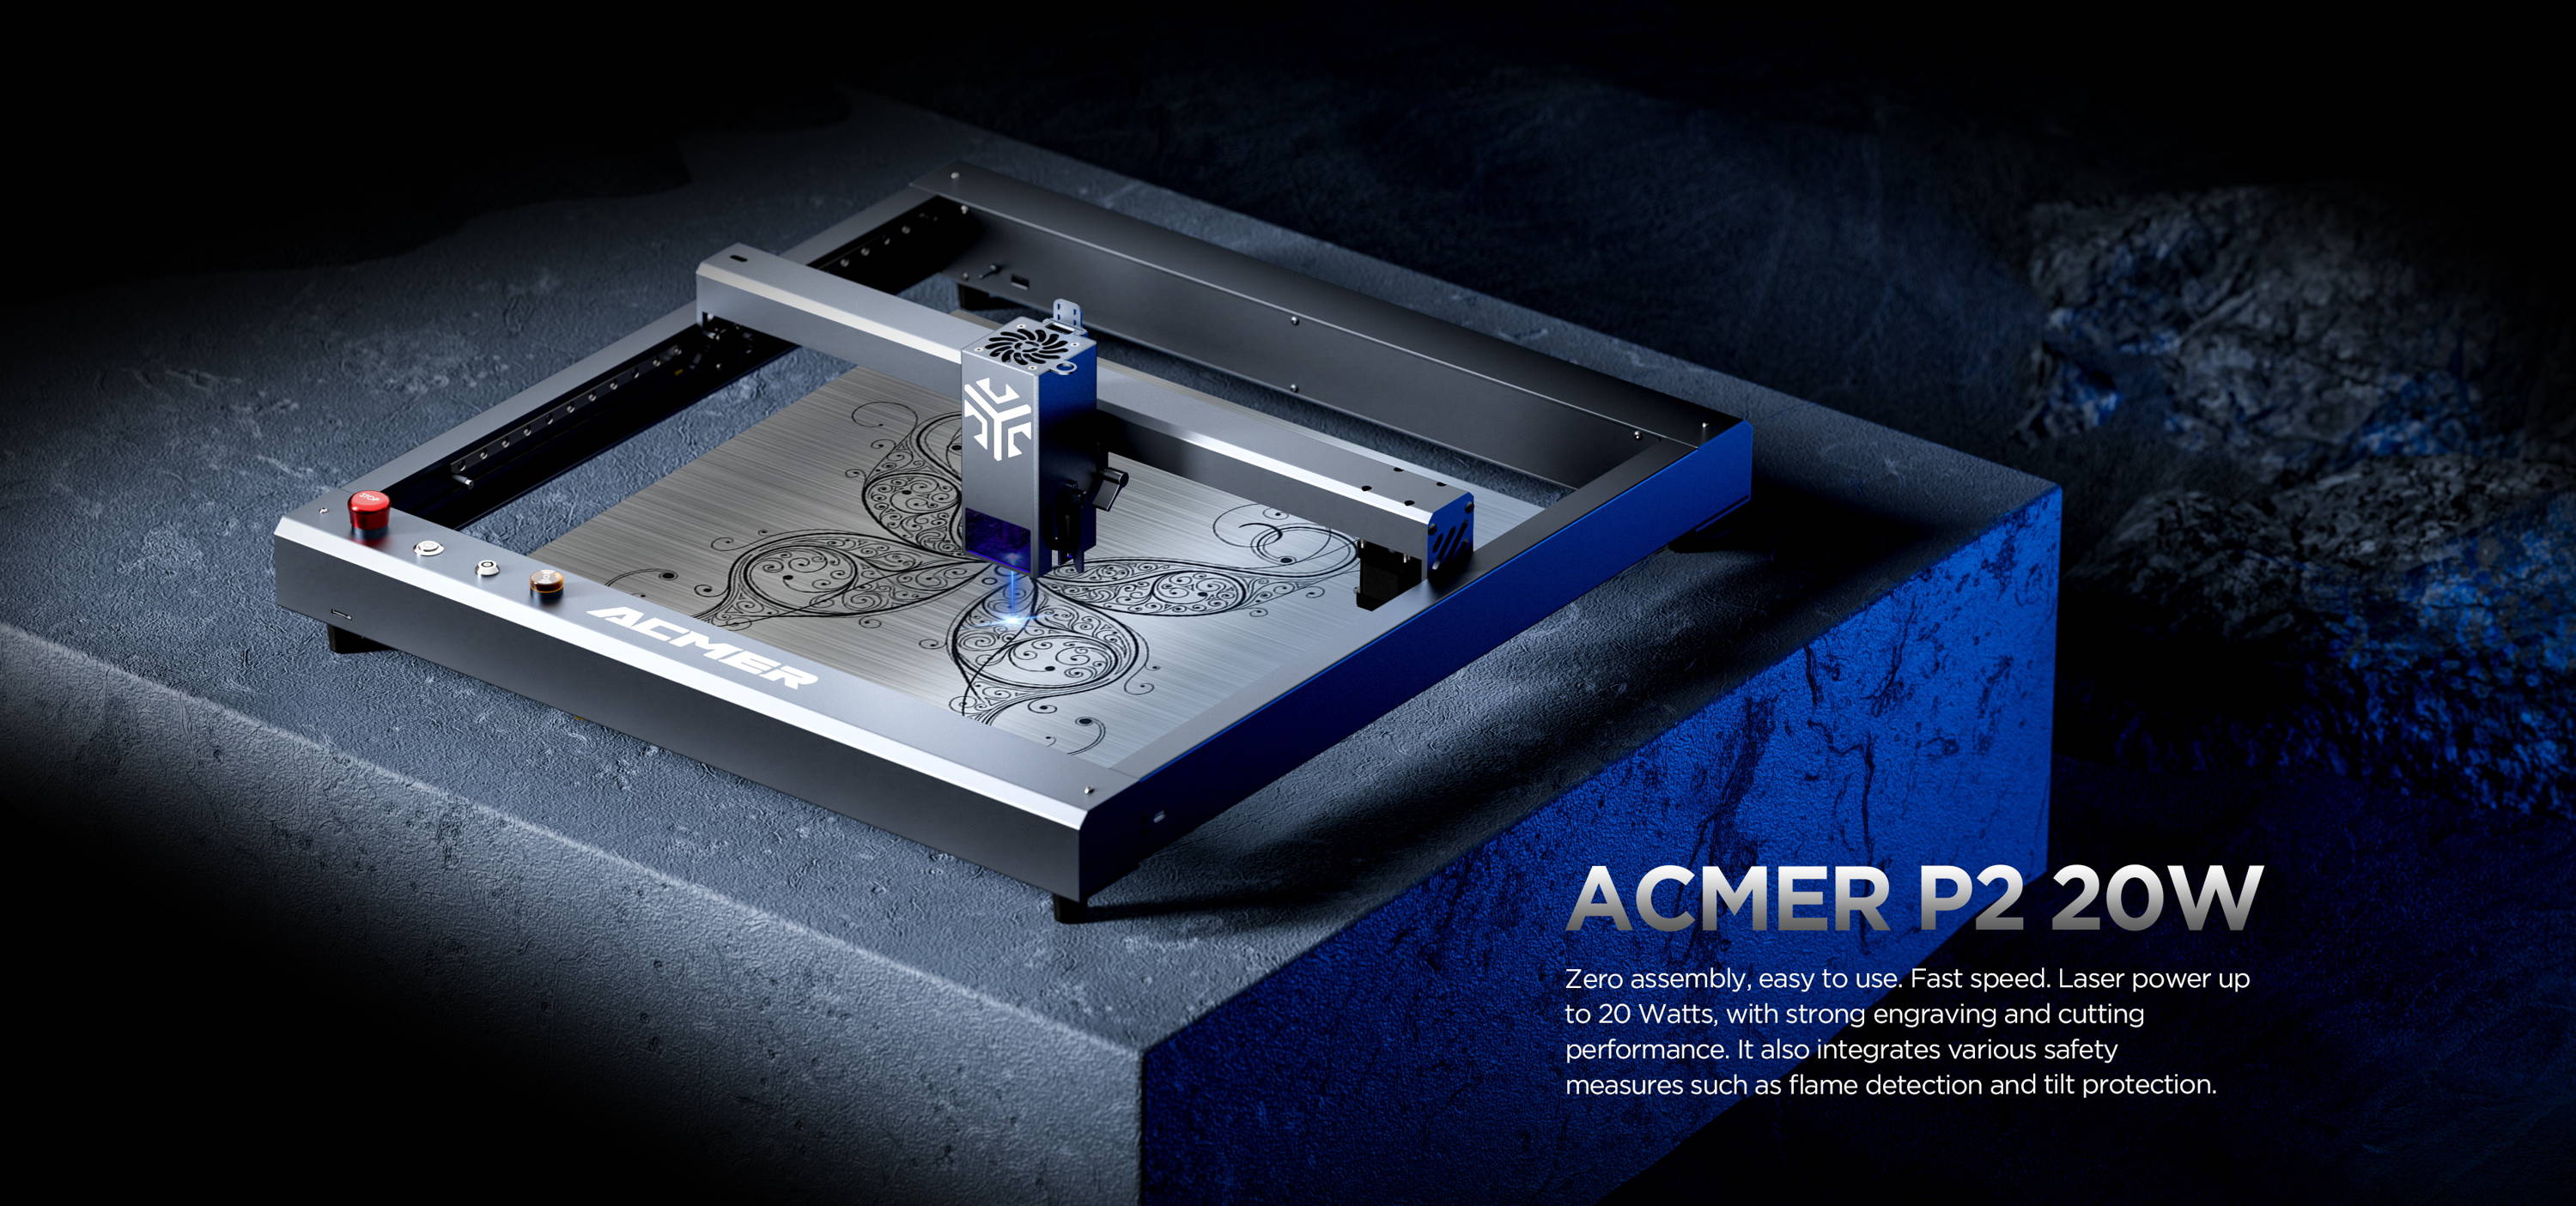 ACMER P2 20W laser engraving cutter machine